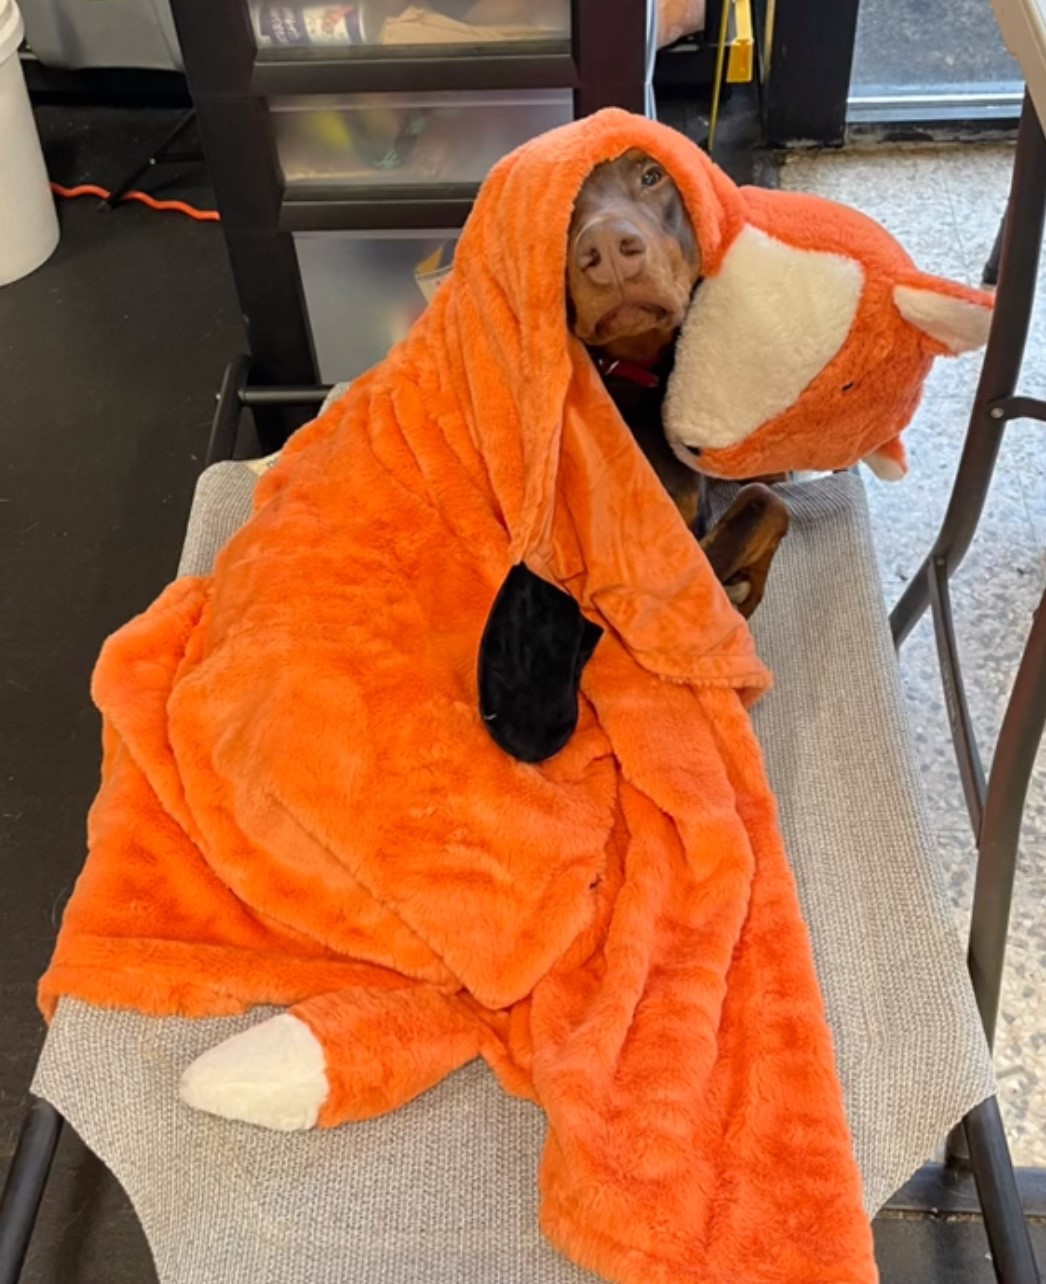 doberman with orange fluffy costume